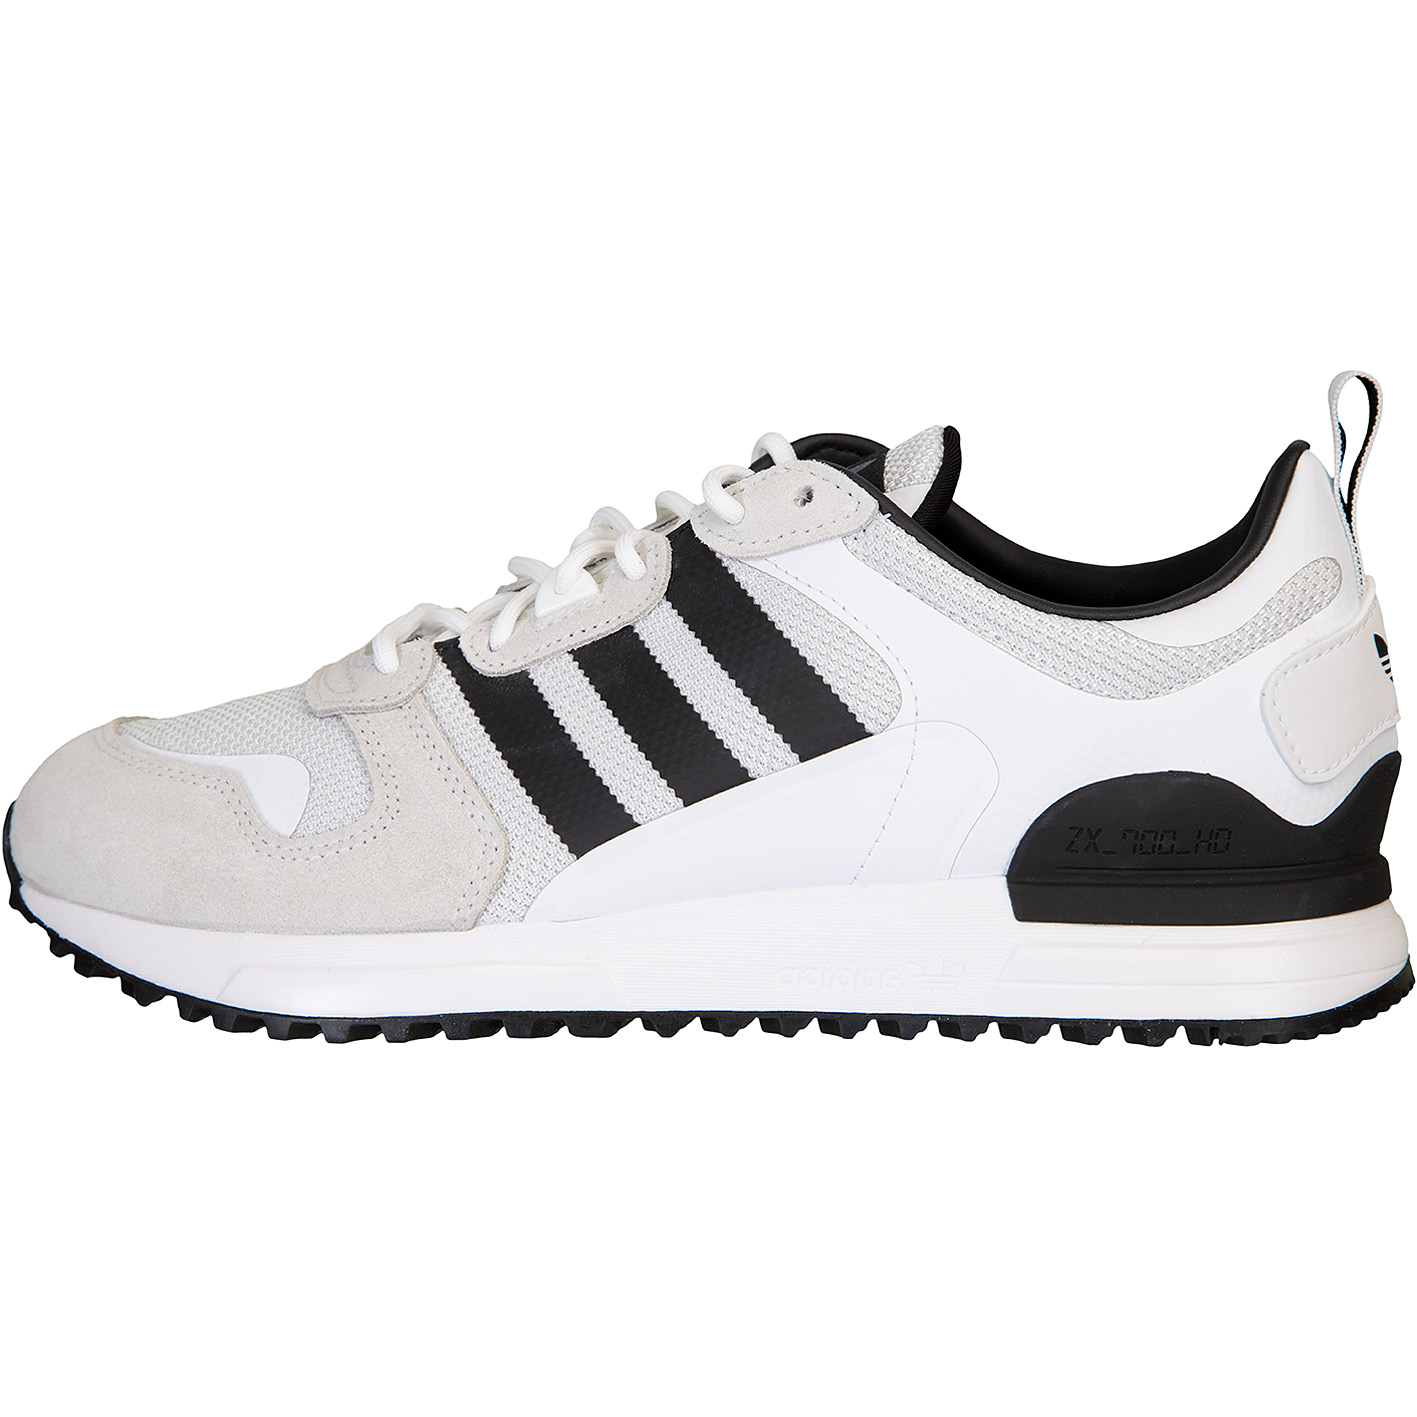 ☆ Adidas ZX 700 HD Sneaker weiß - hier bestellen!